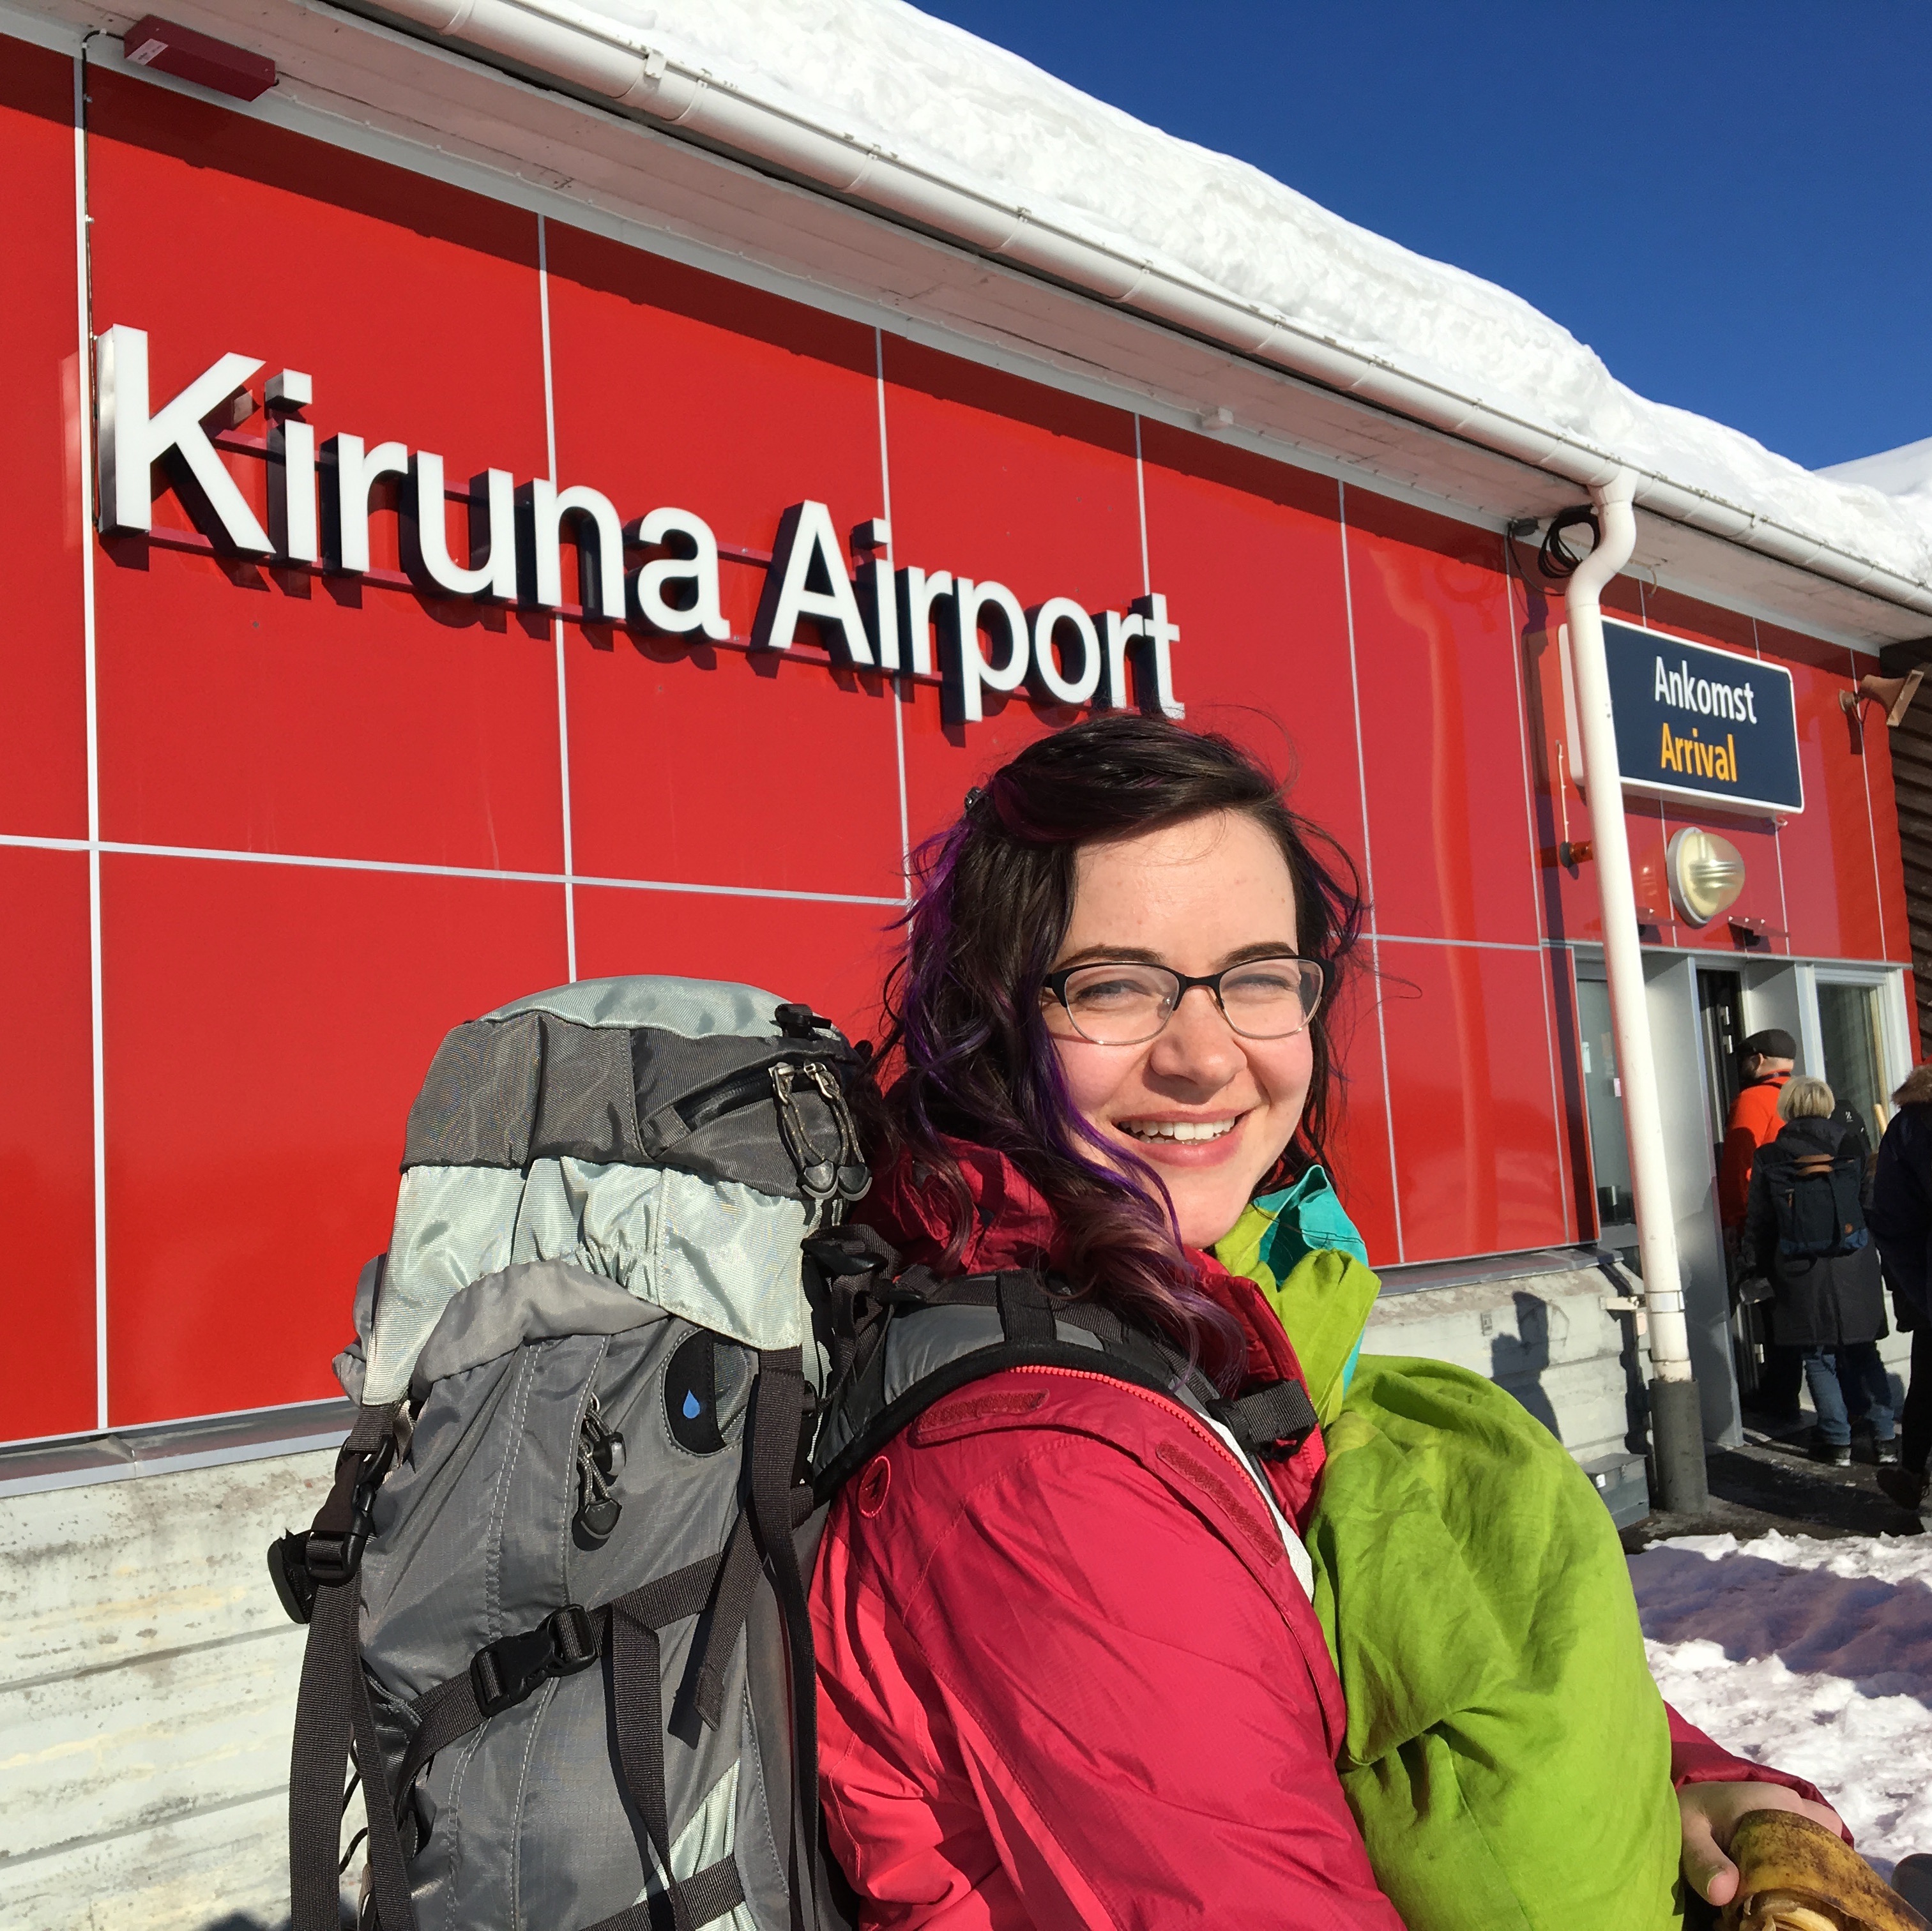 Teeny tiny Kiruna airport. Lots of available seats and plugs inside.